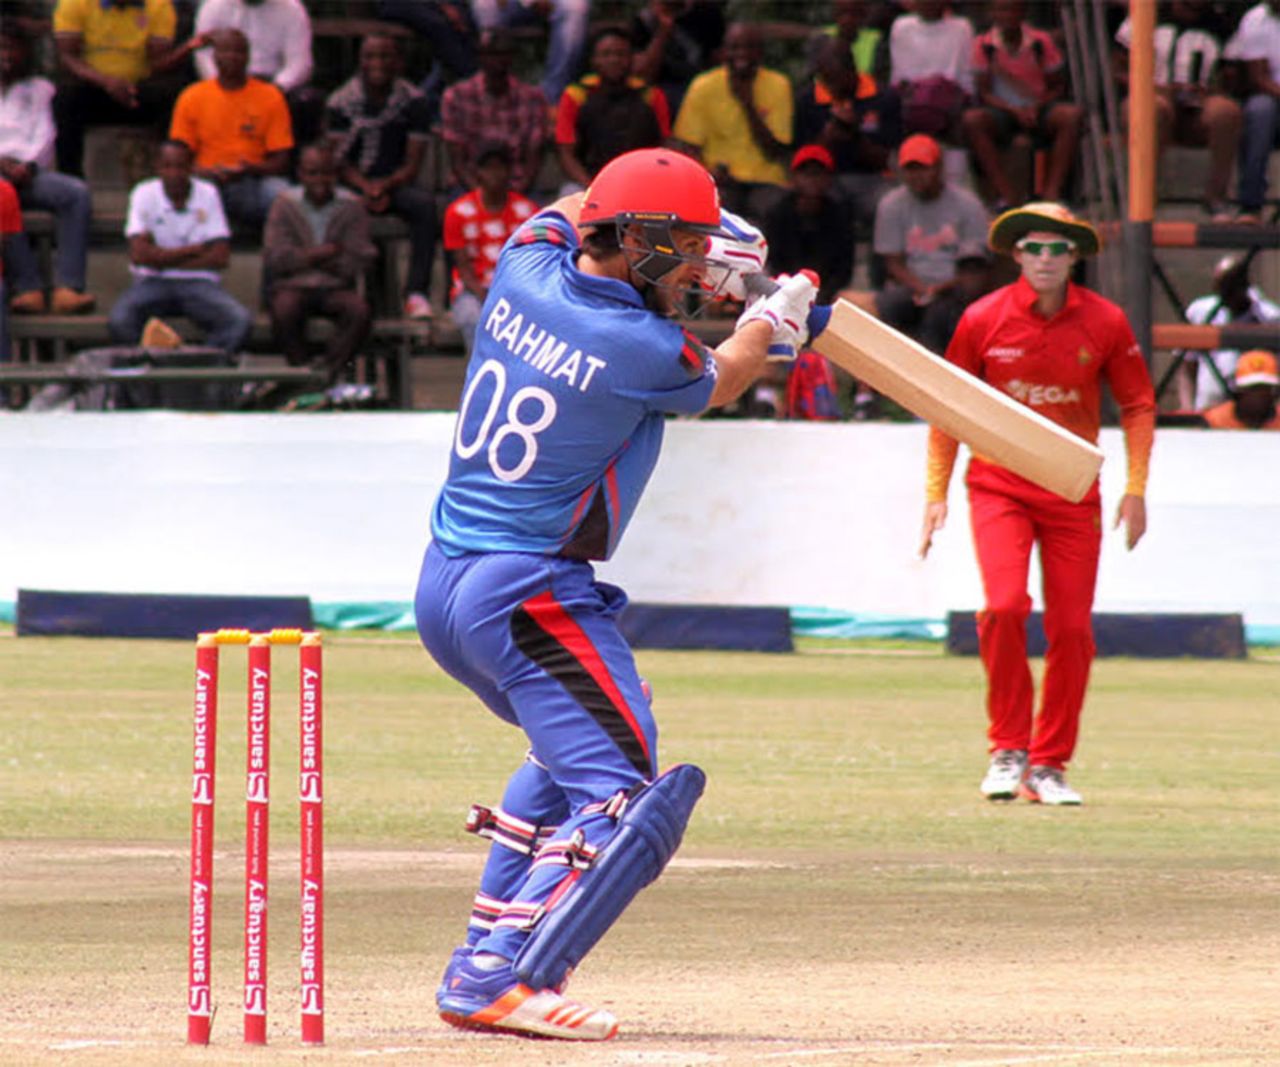 Rahmat Shah top scored with 50, Zimbabwe v Afghanistan, 5th ODI, Harare, February 26, 2017